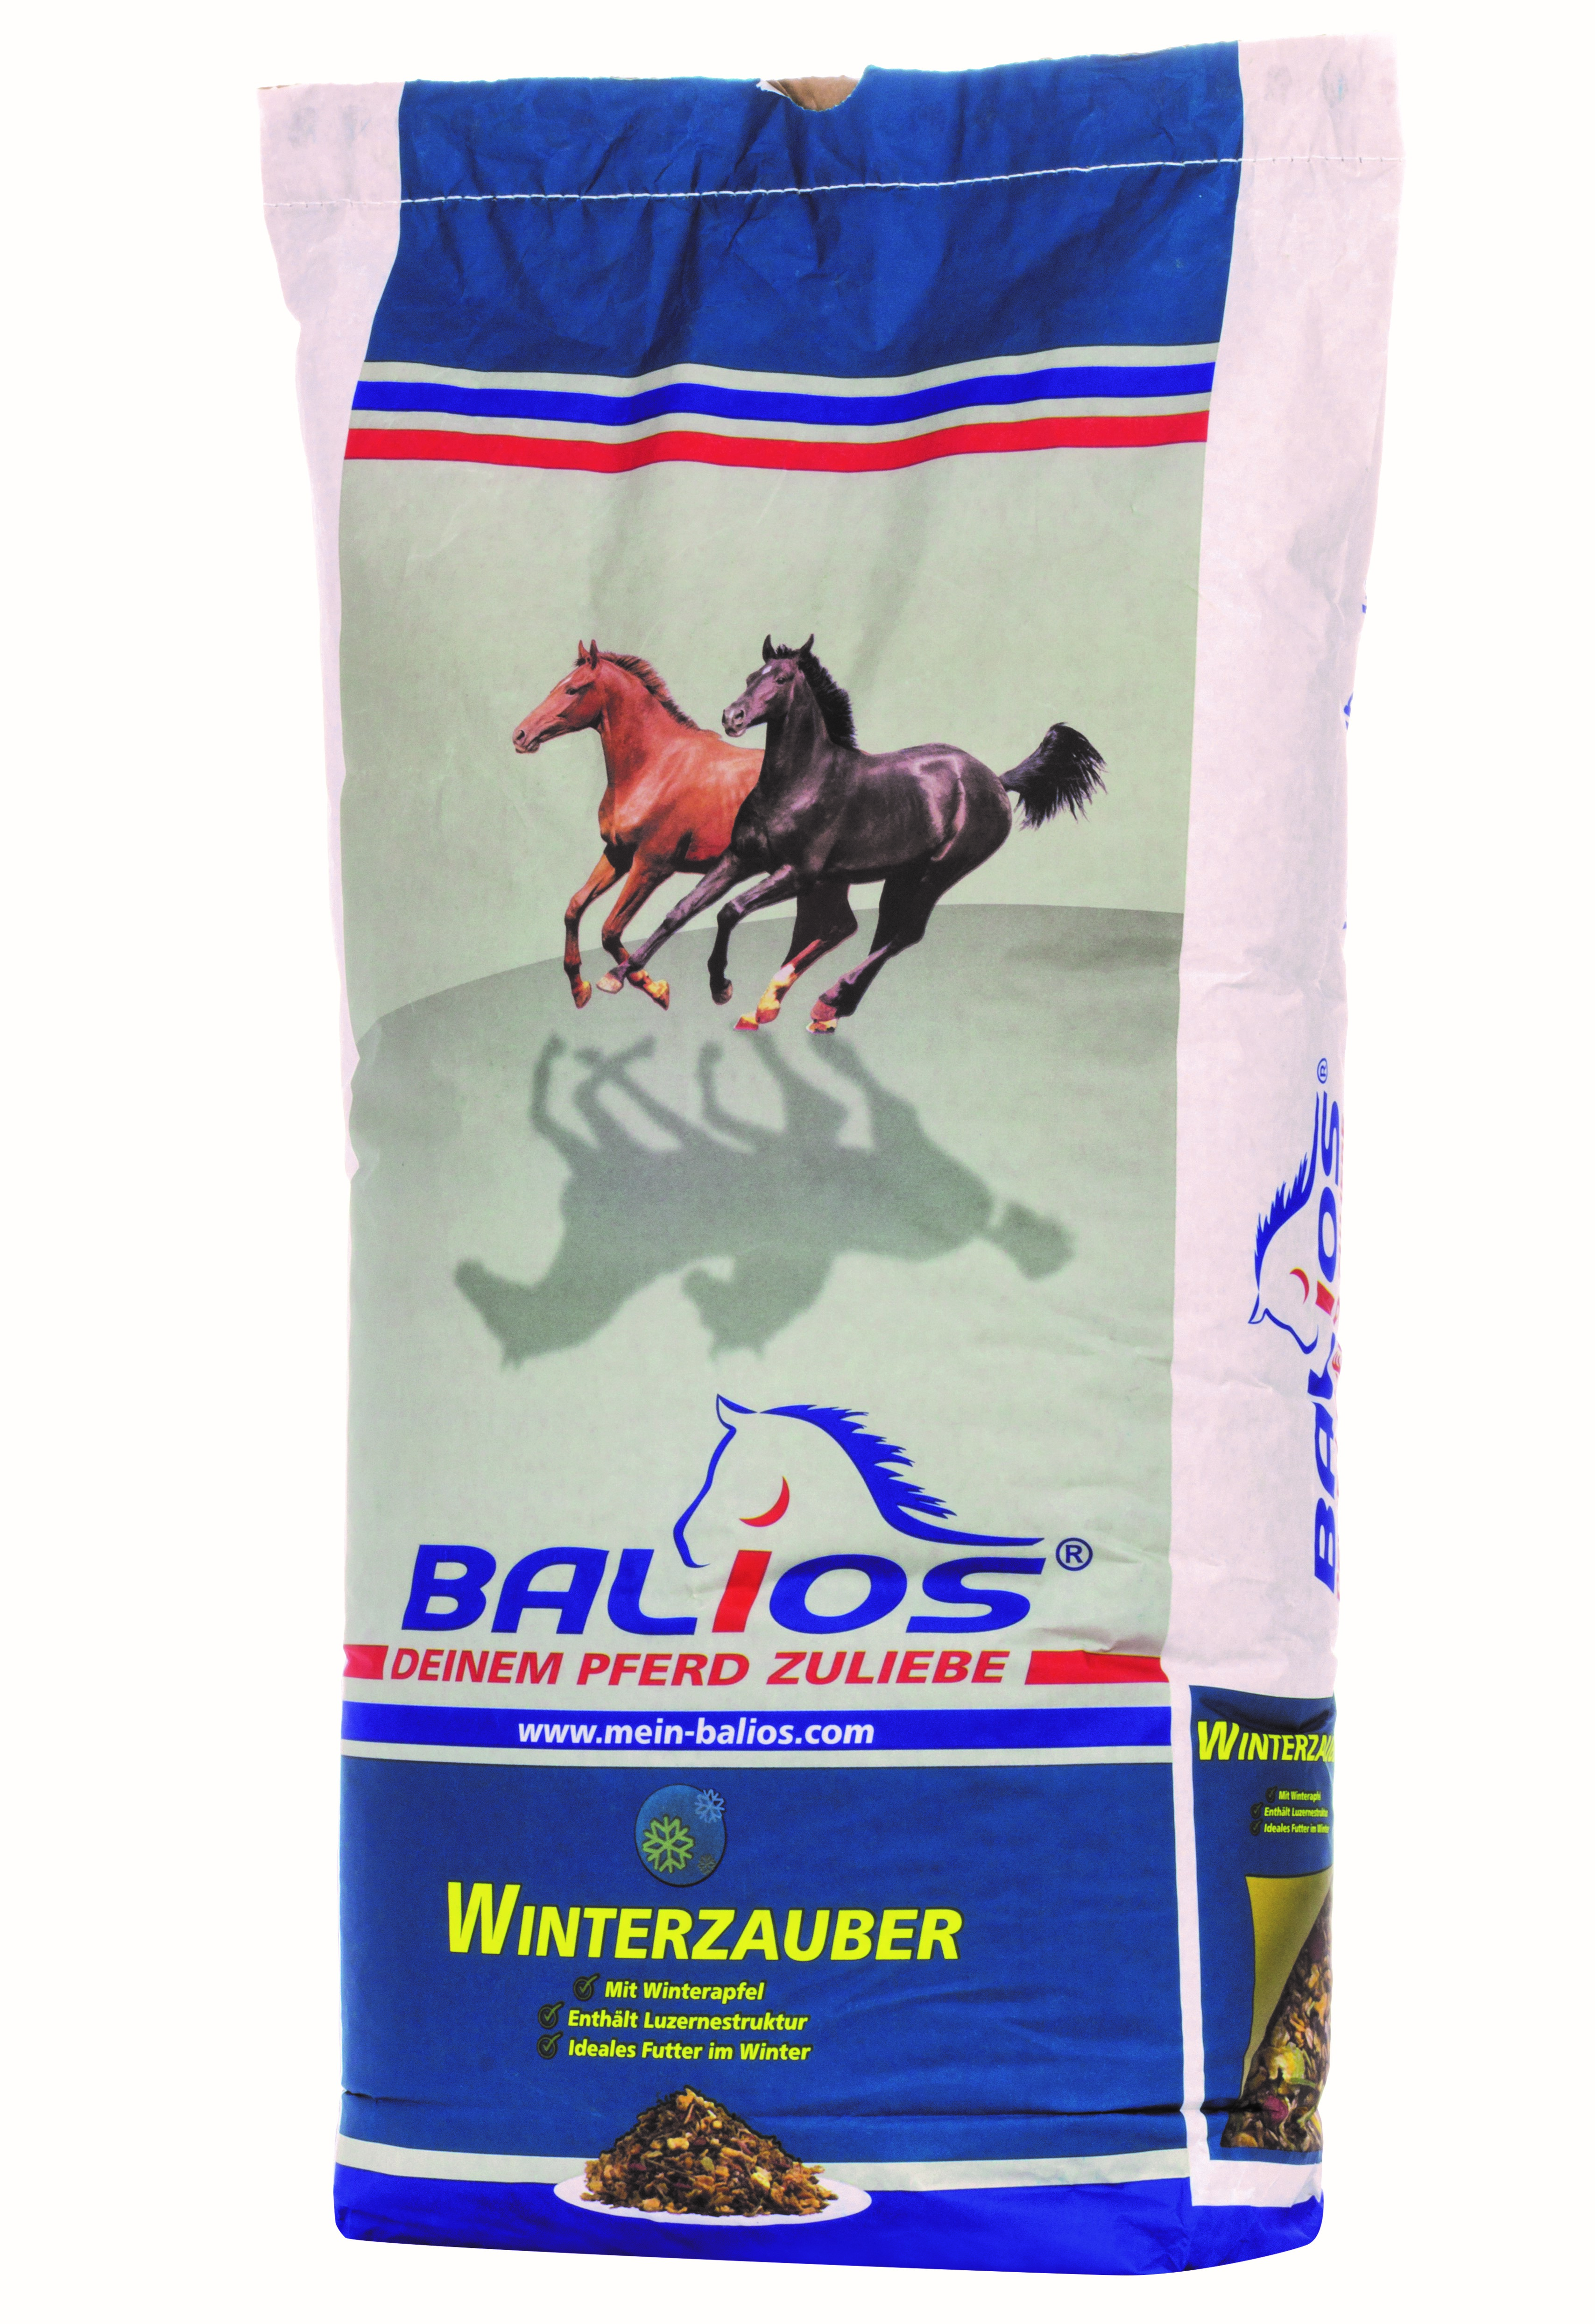 Balios Winterzauber 20kg Sack Pferdefutter